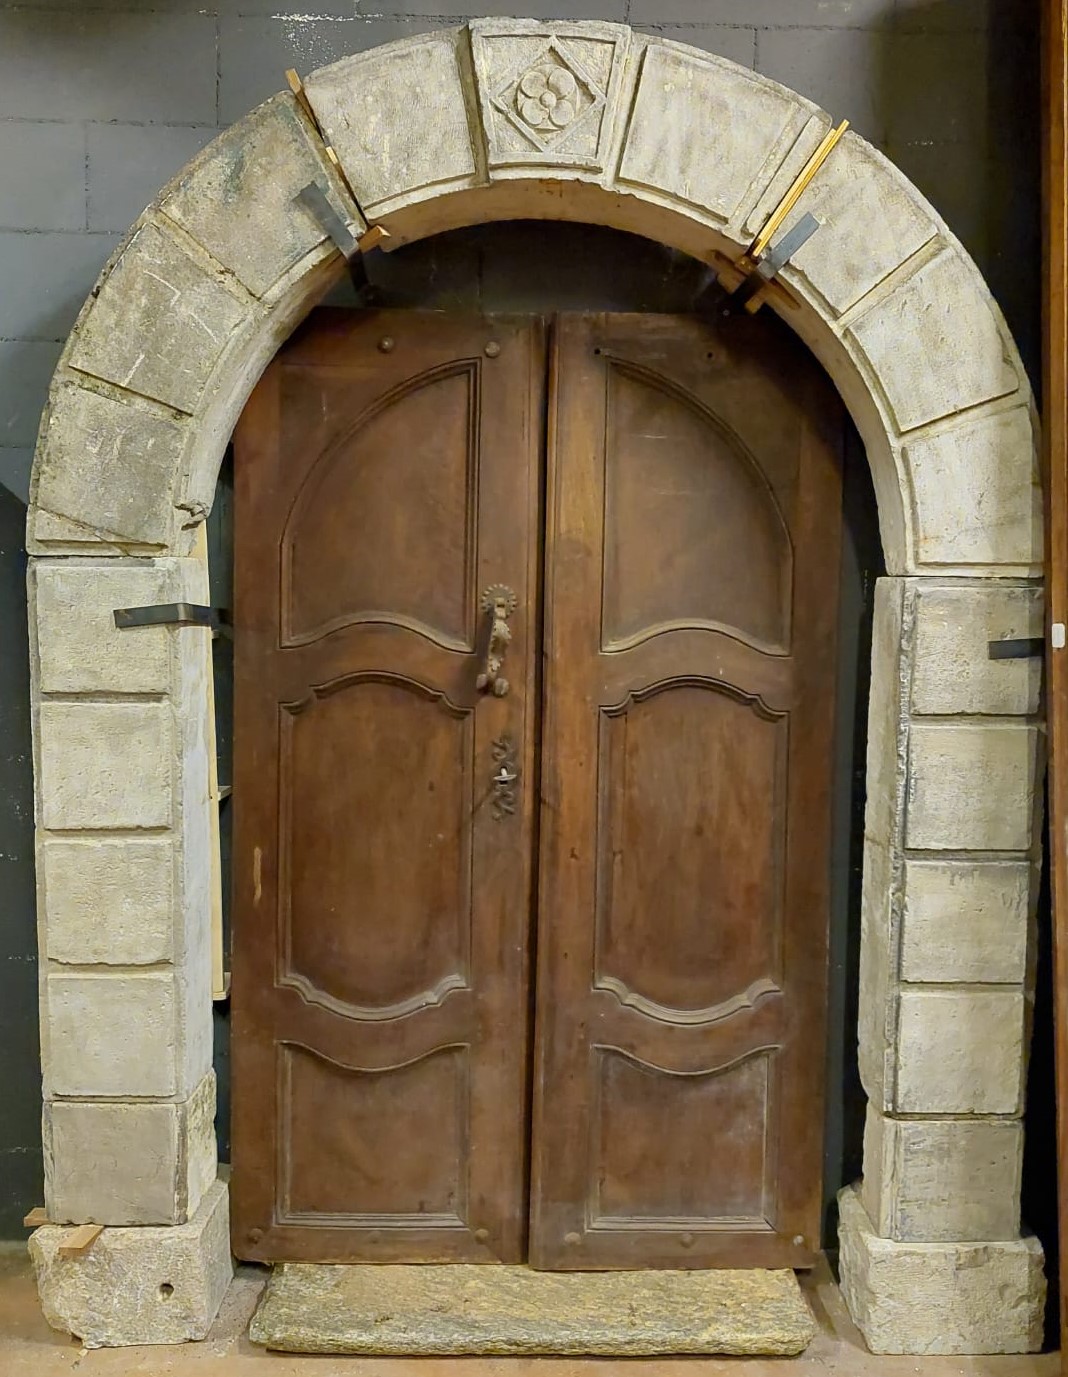 dars491 - eighteenth-century stone portal, max size cm w 182 x h 230